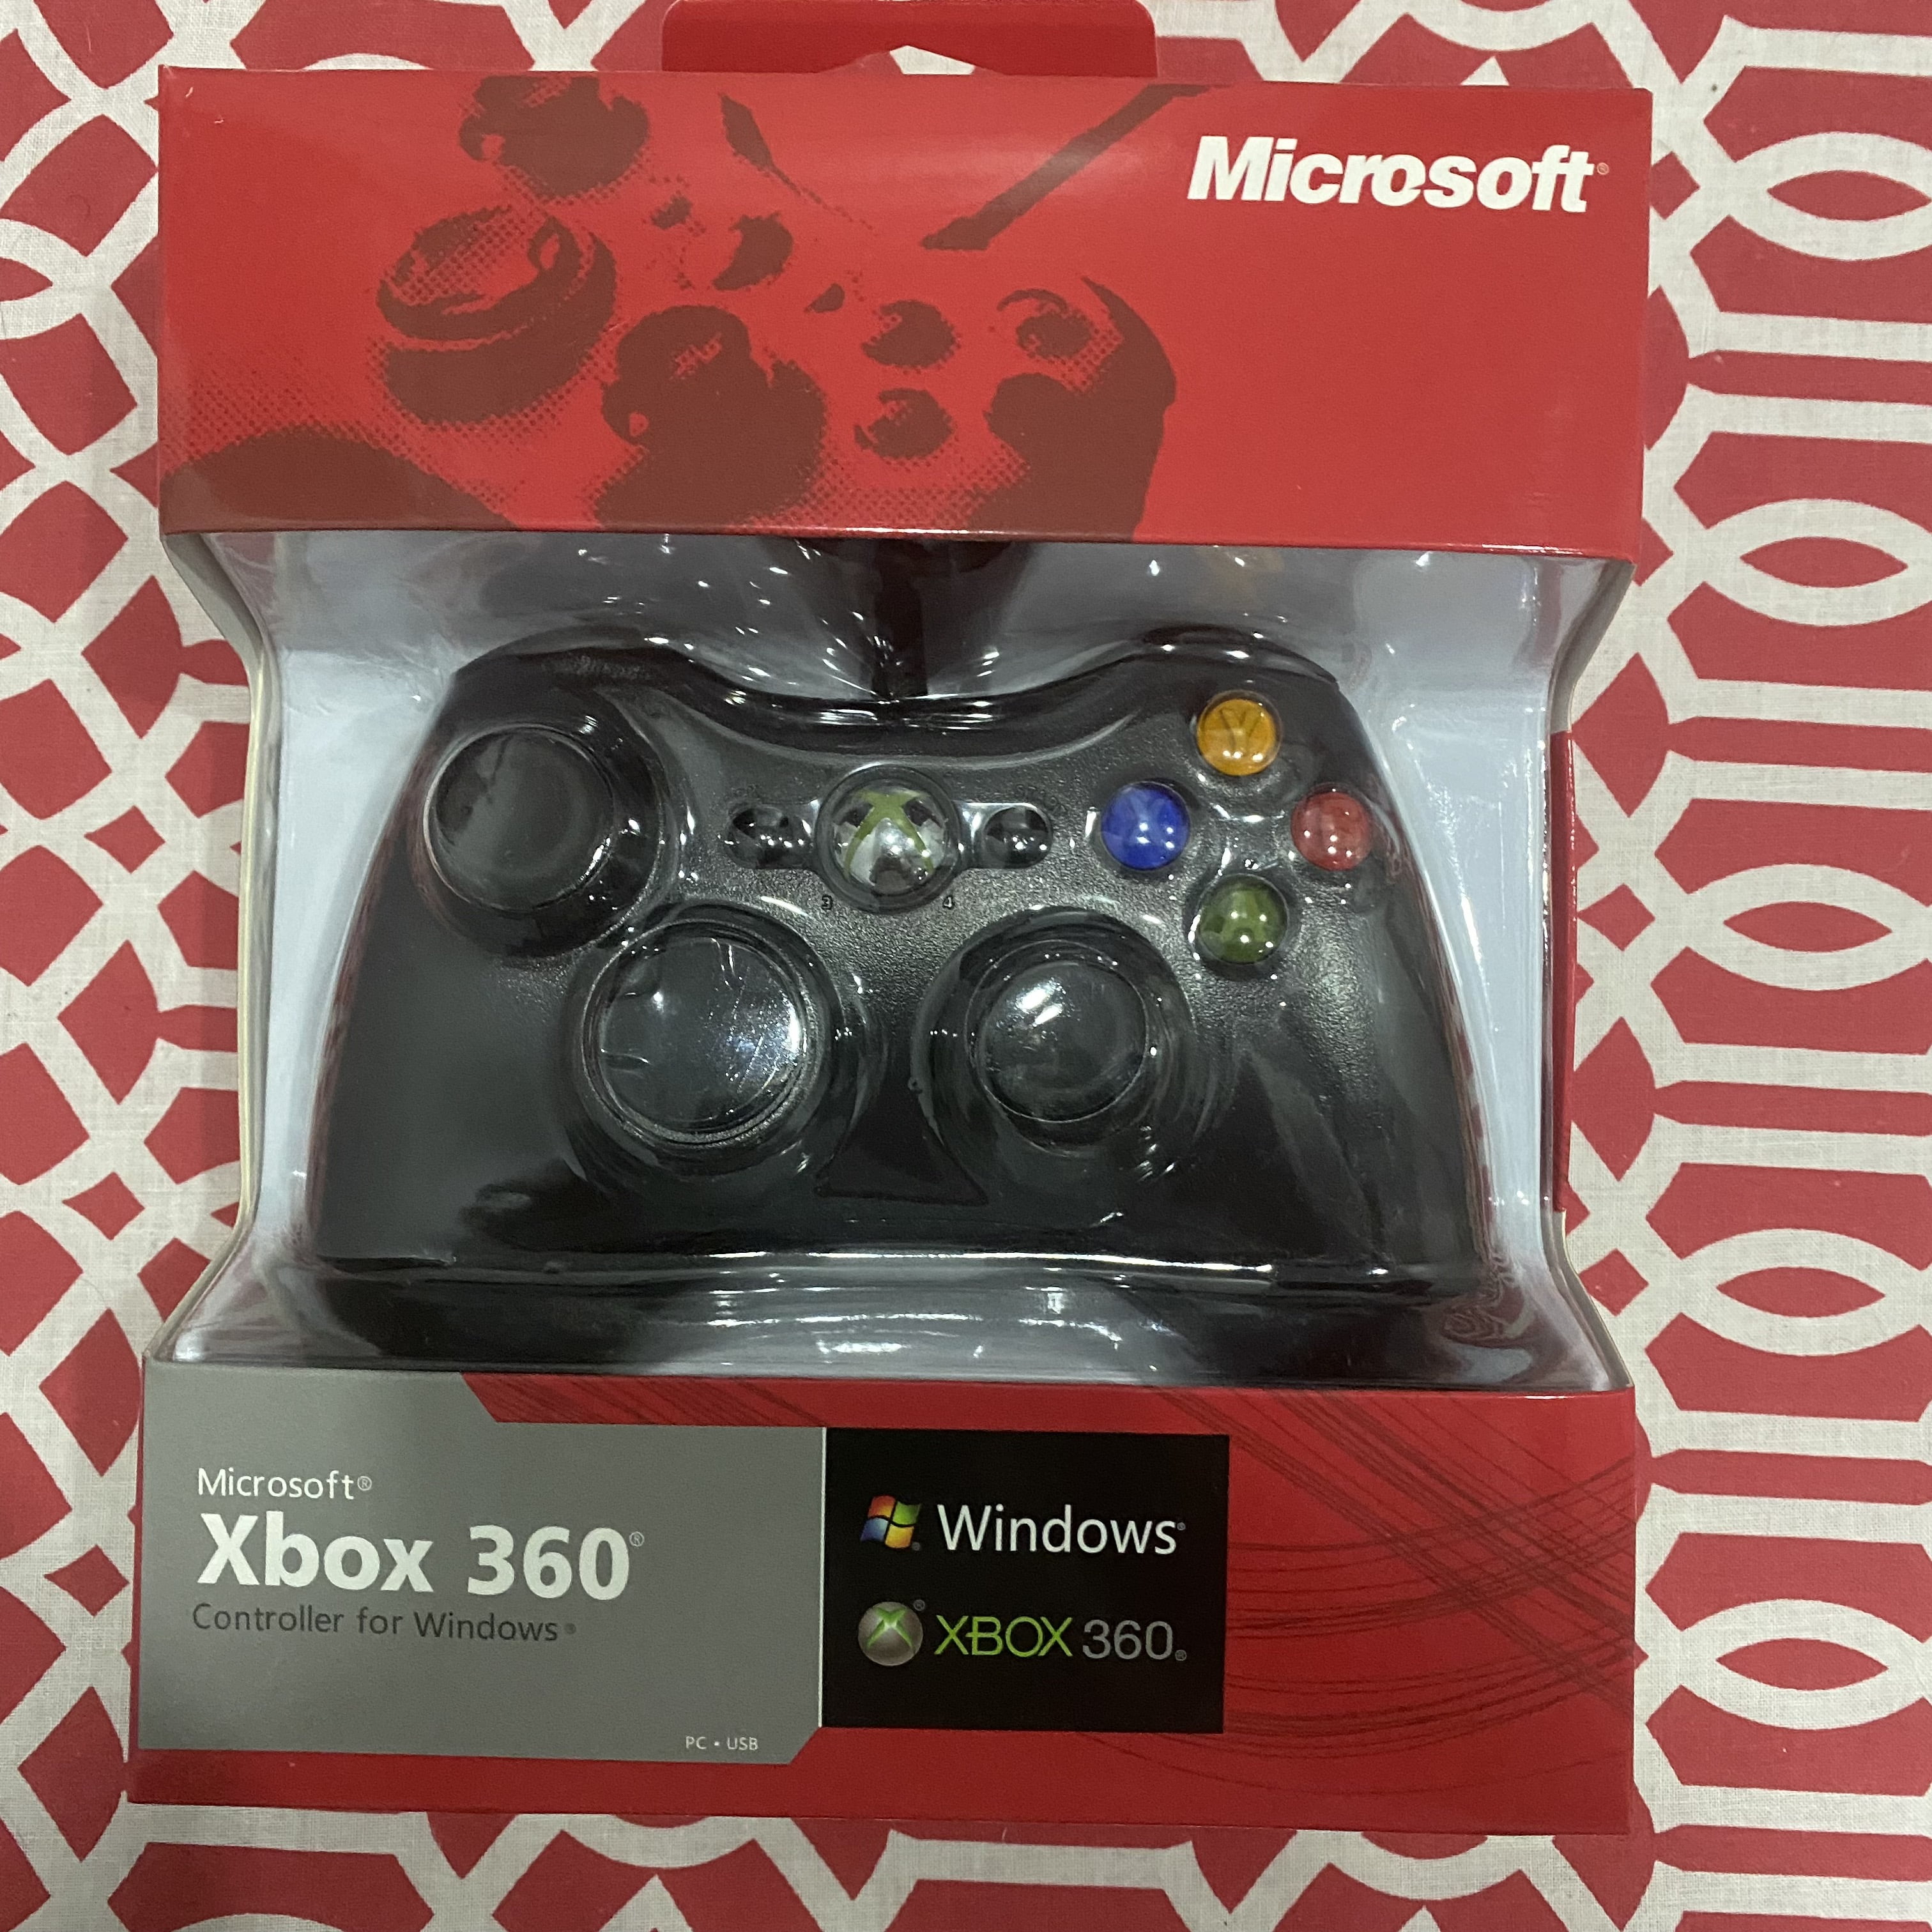 Microsoft Xbox 360 Controller Walmart.com